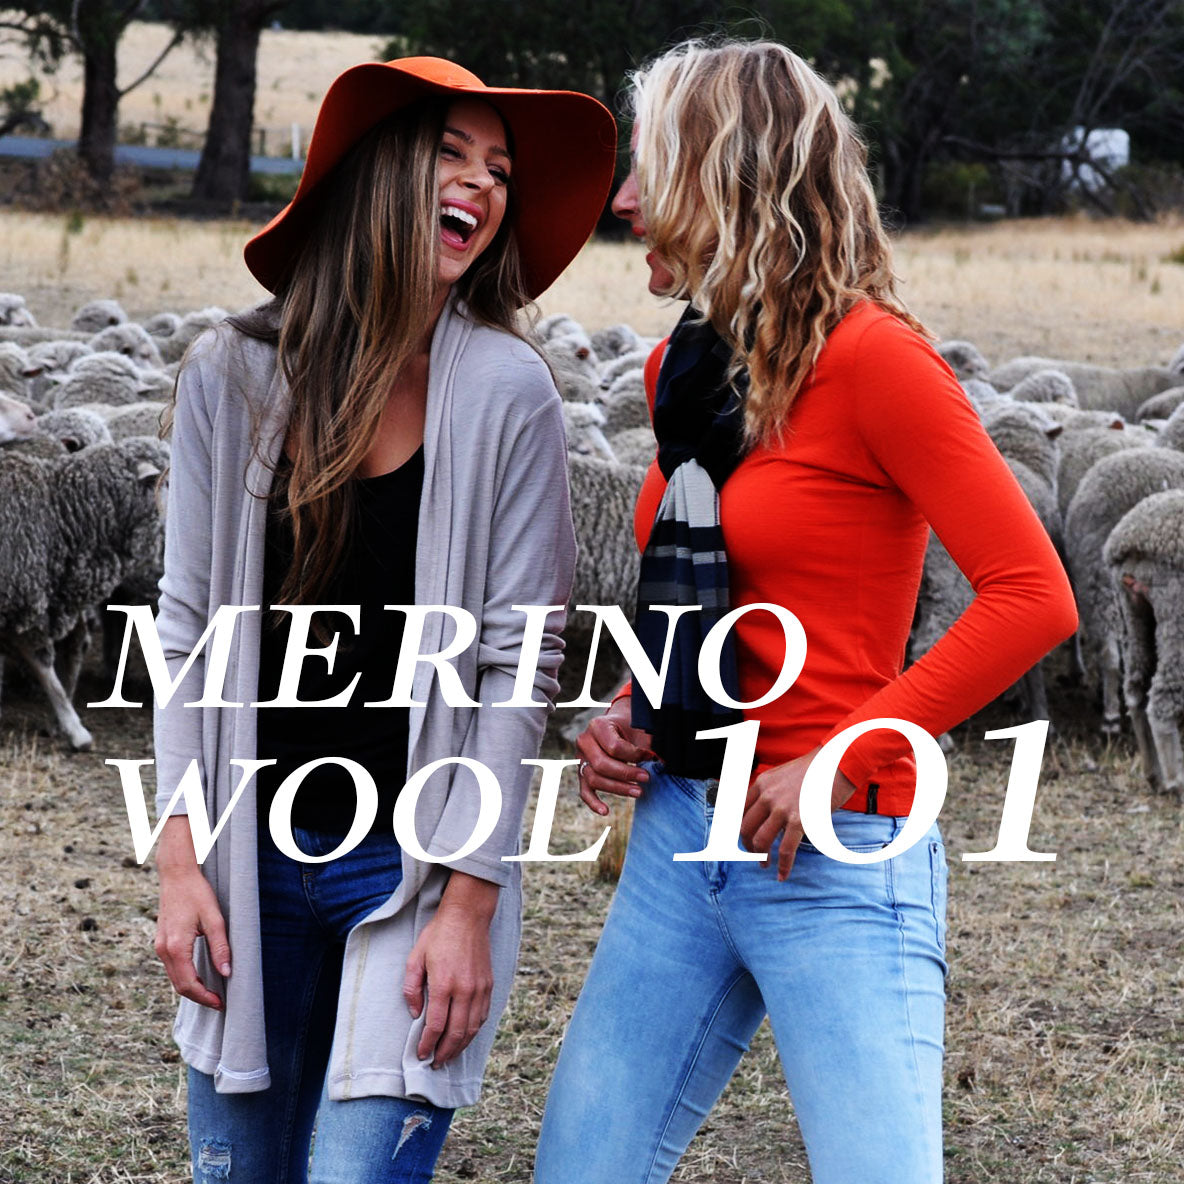 Merino Wool - 10 fantastic benefits that make you love it!